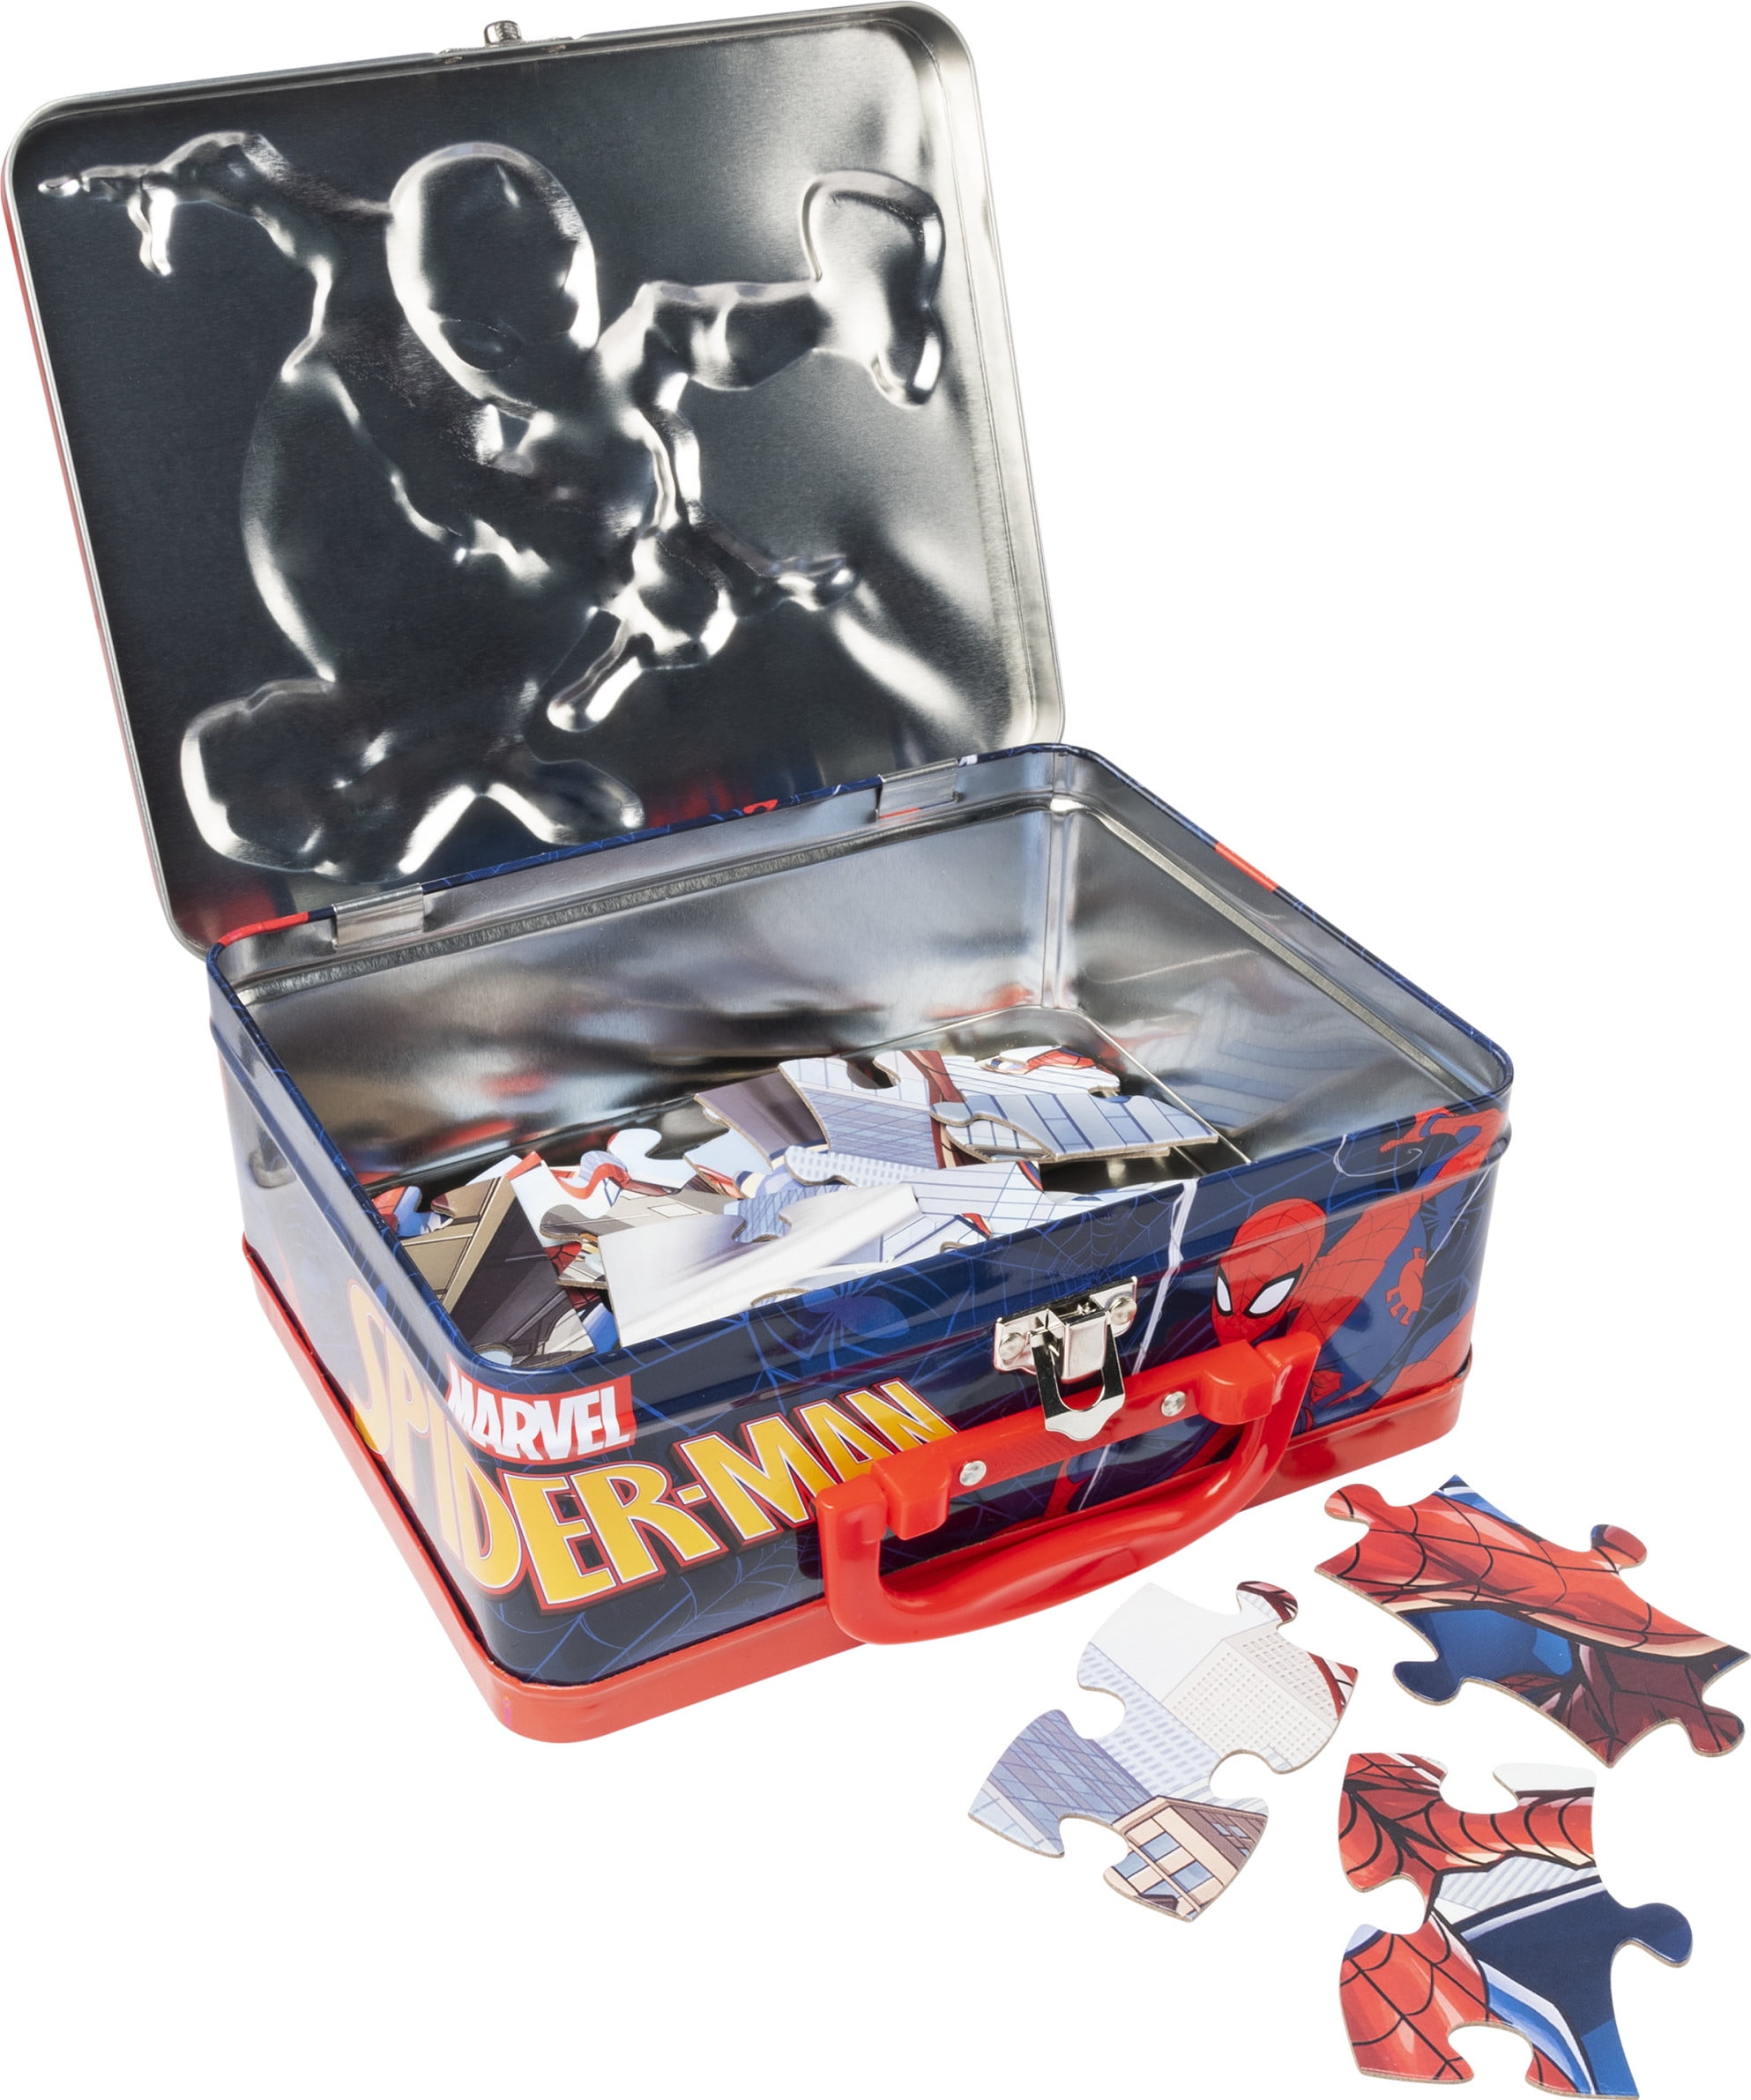 Marvel Avengers 48-piece puzzle & tin storage lunch box, Five Below